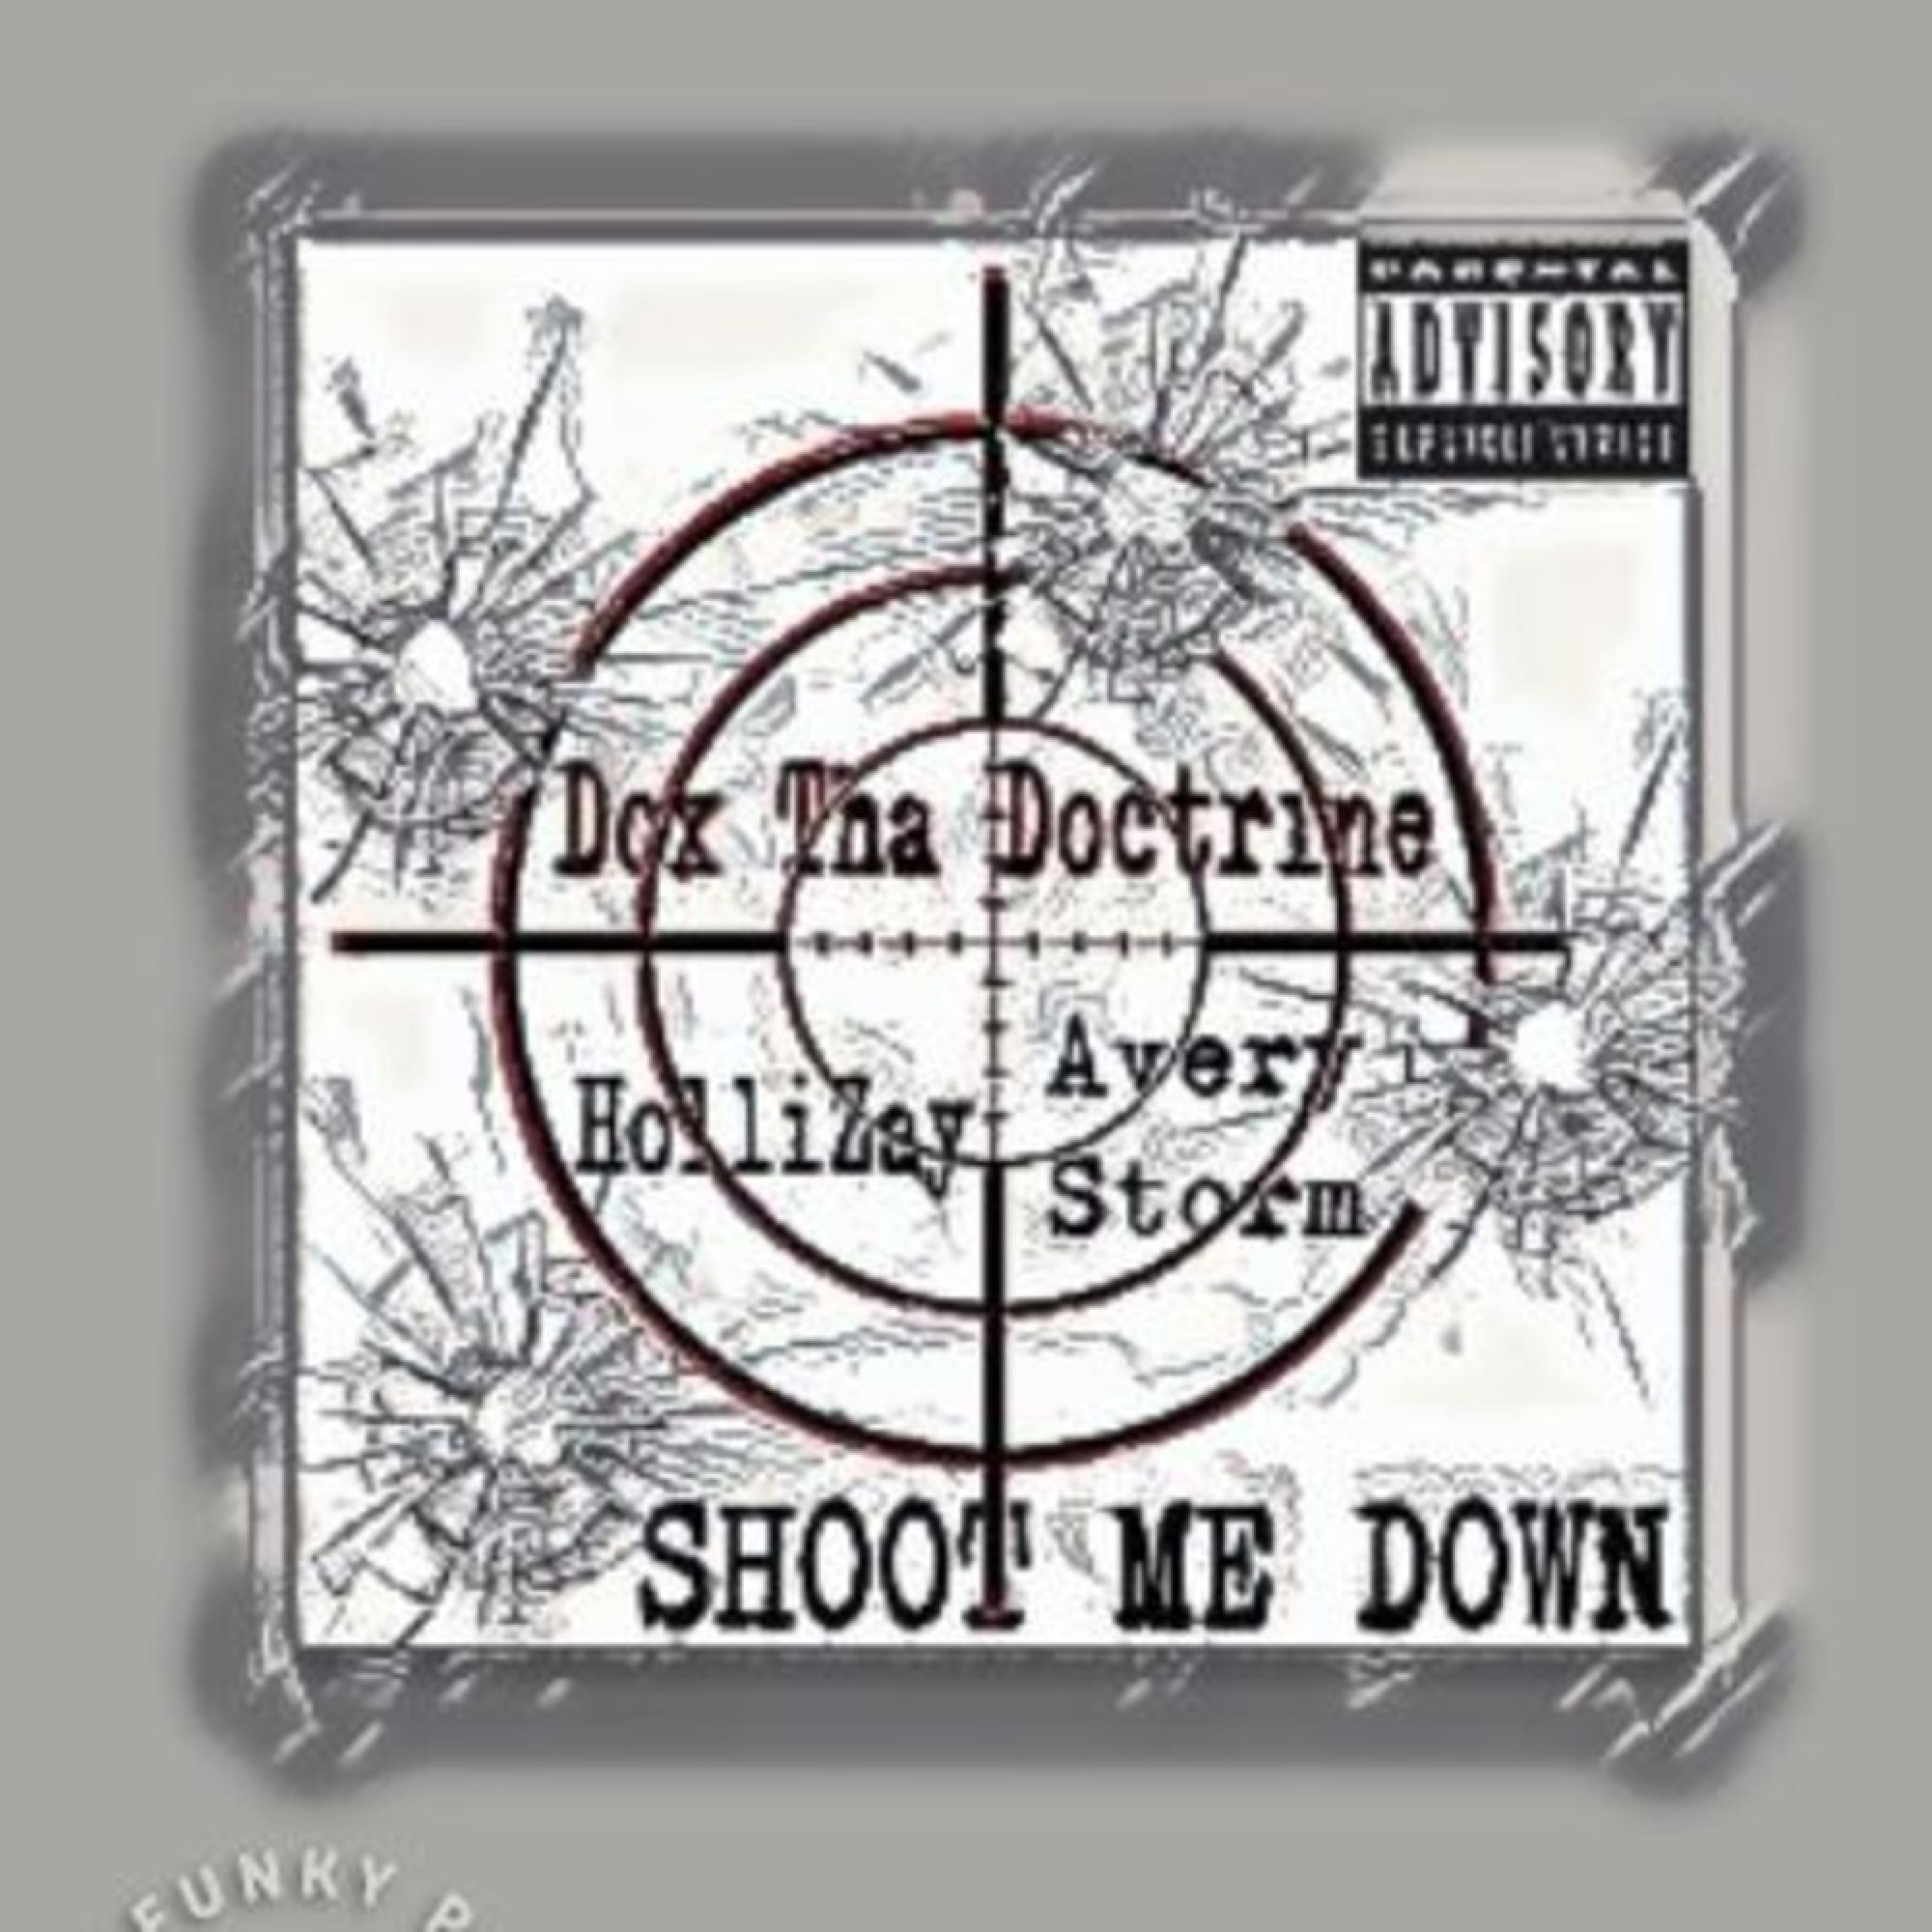 Dox Tha Doctrine - Shoot Me Down (feat. Avery Storm & HolliZay)